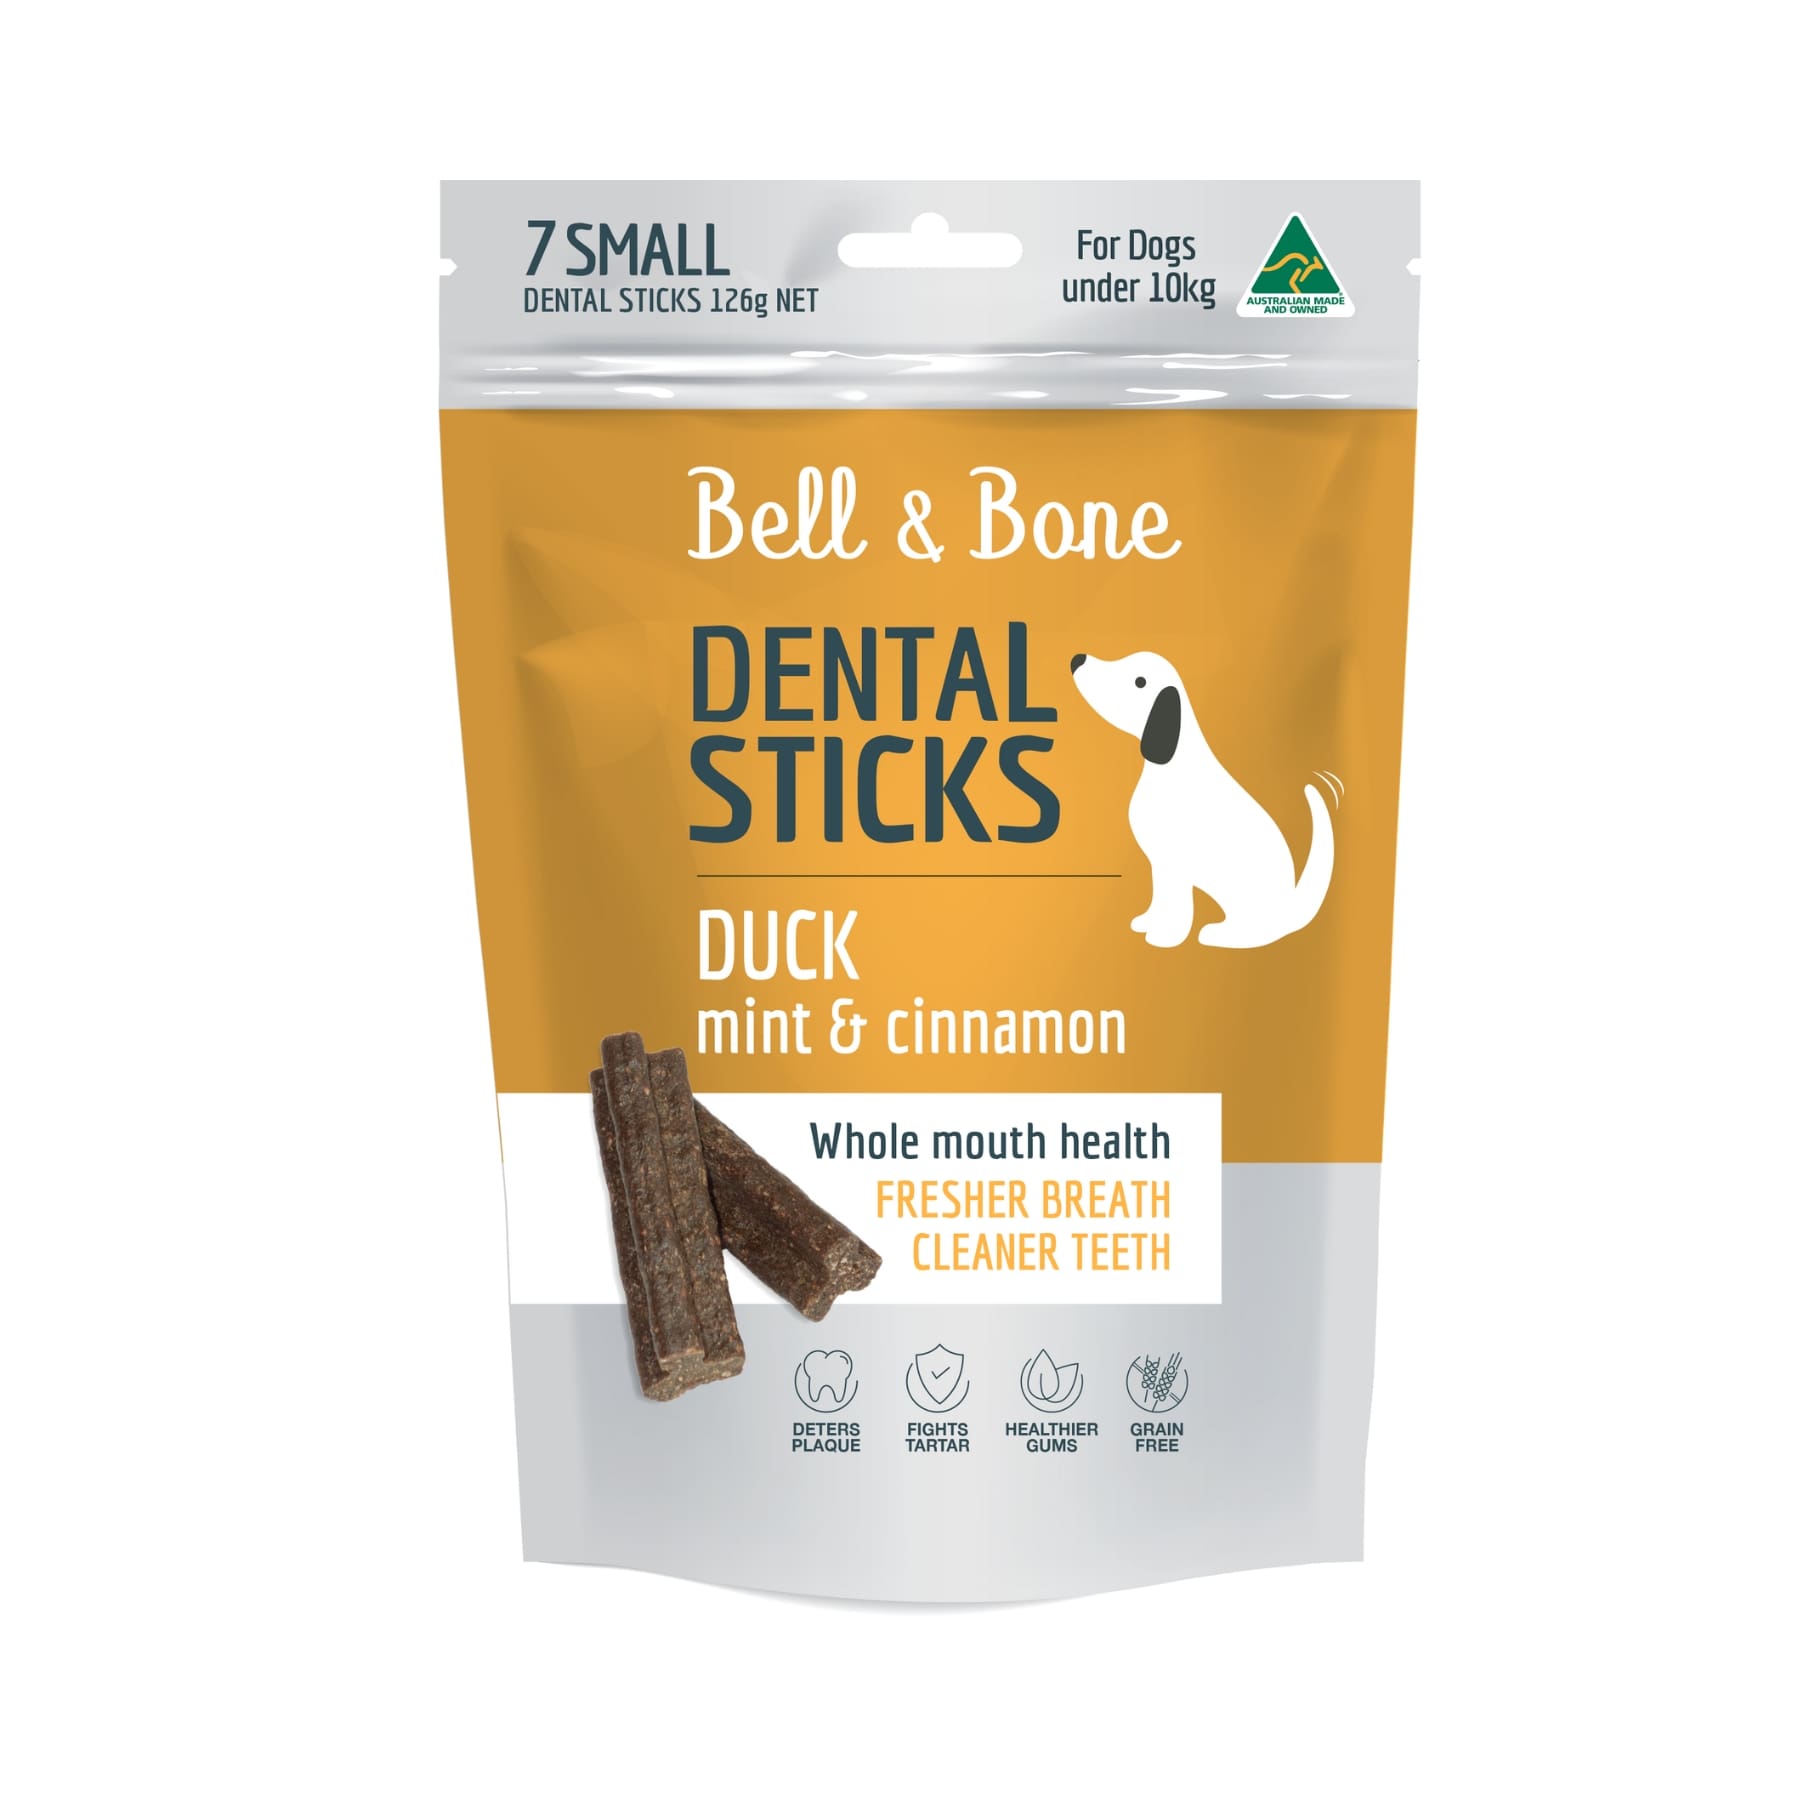 Bell & Bone Dental Sticks Duck, Mint & Cinnamon - Small. Australian Made Dental Treats for Dogs.